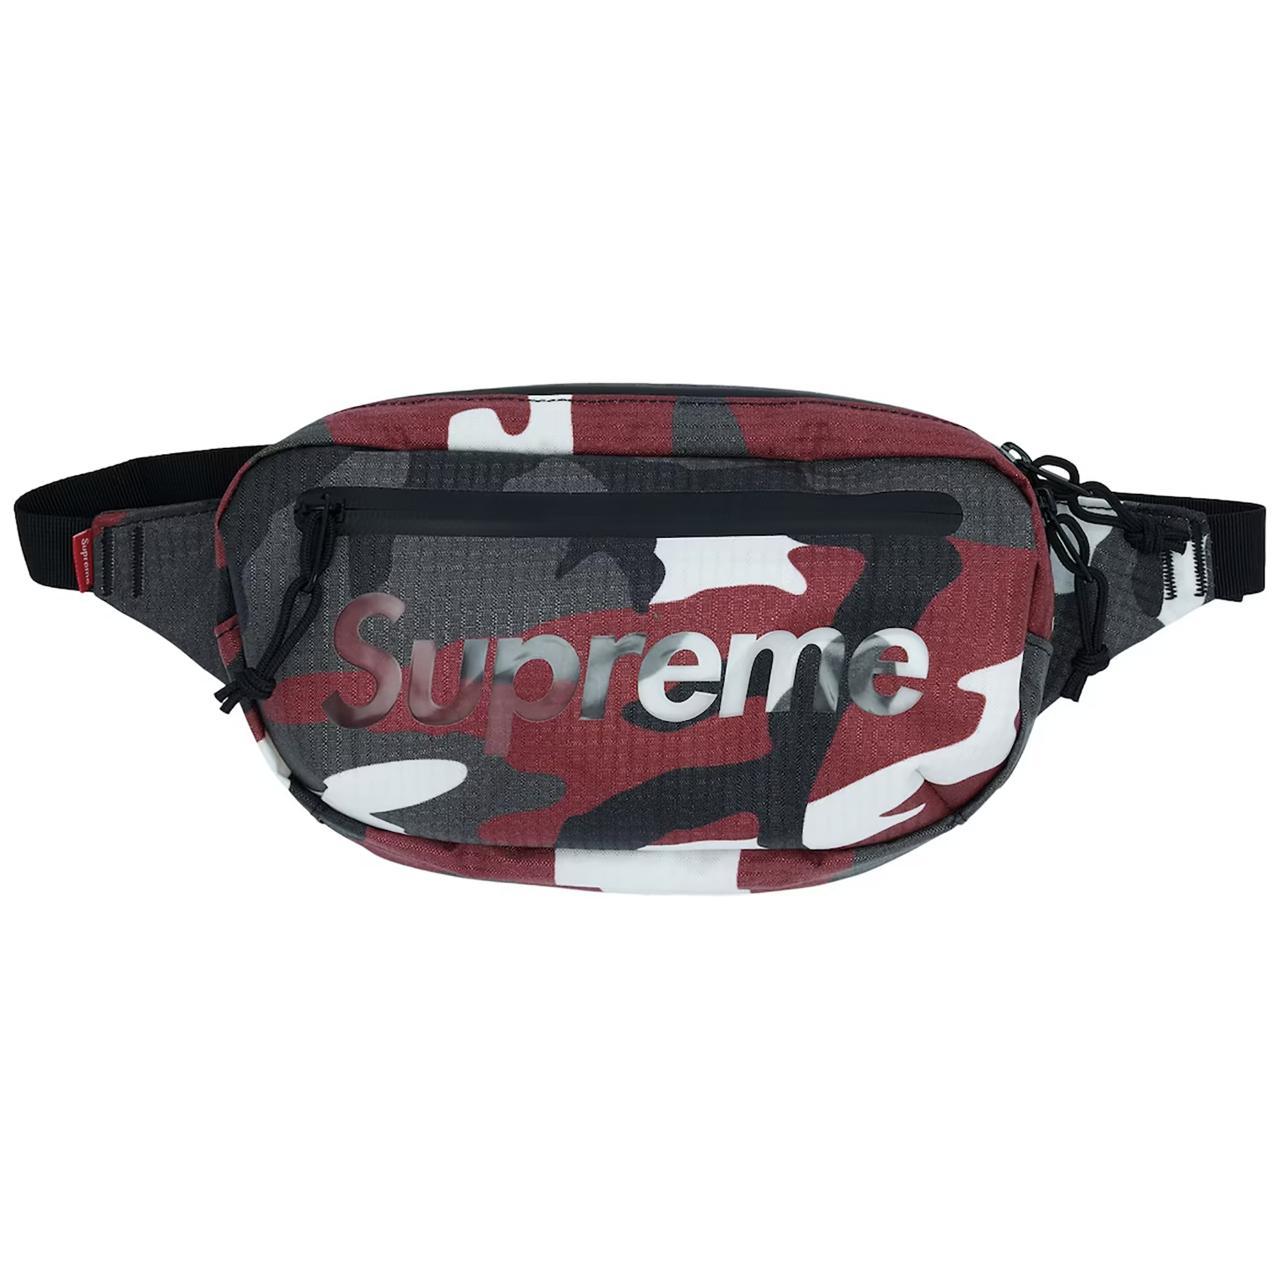 Supreme Waist Bag SS21 Multicolor New #supreme - Depop